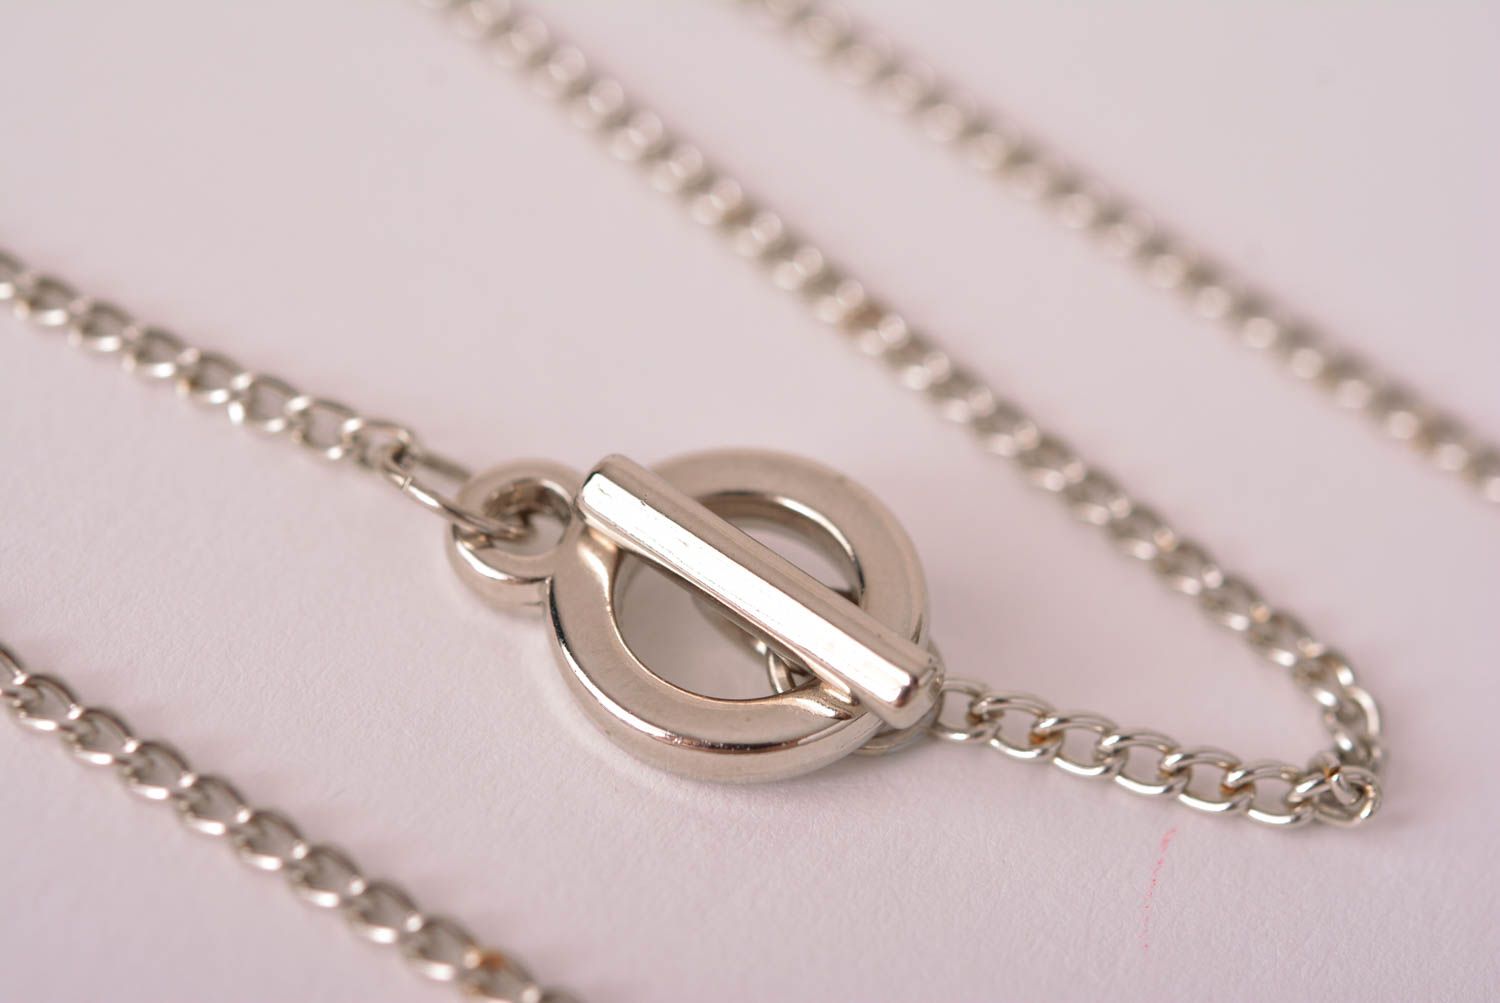 Stylish handmade flower pendant metal necklace handmade accessories for girls photo 5